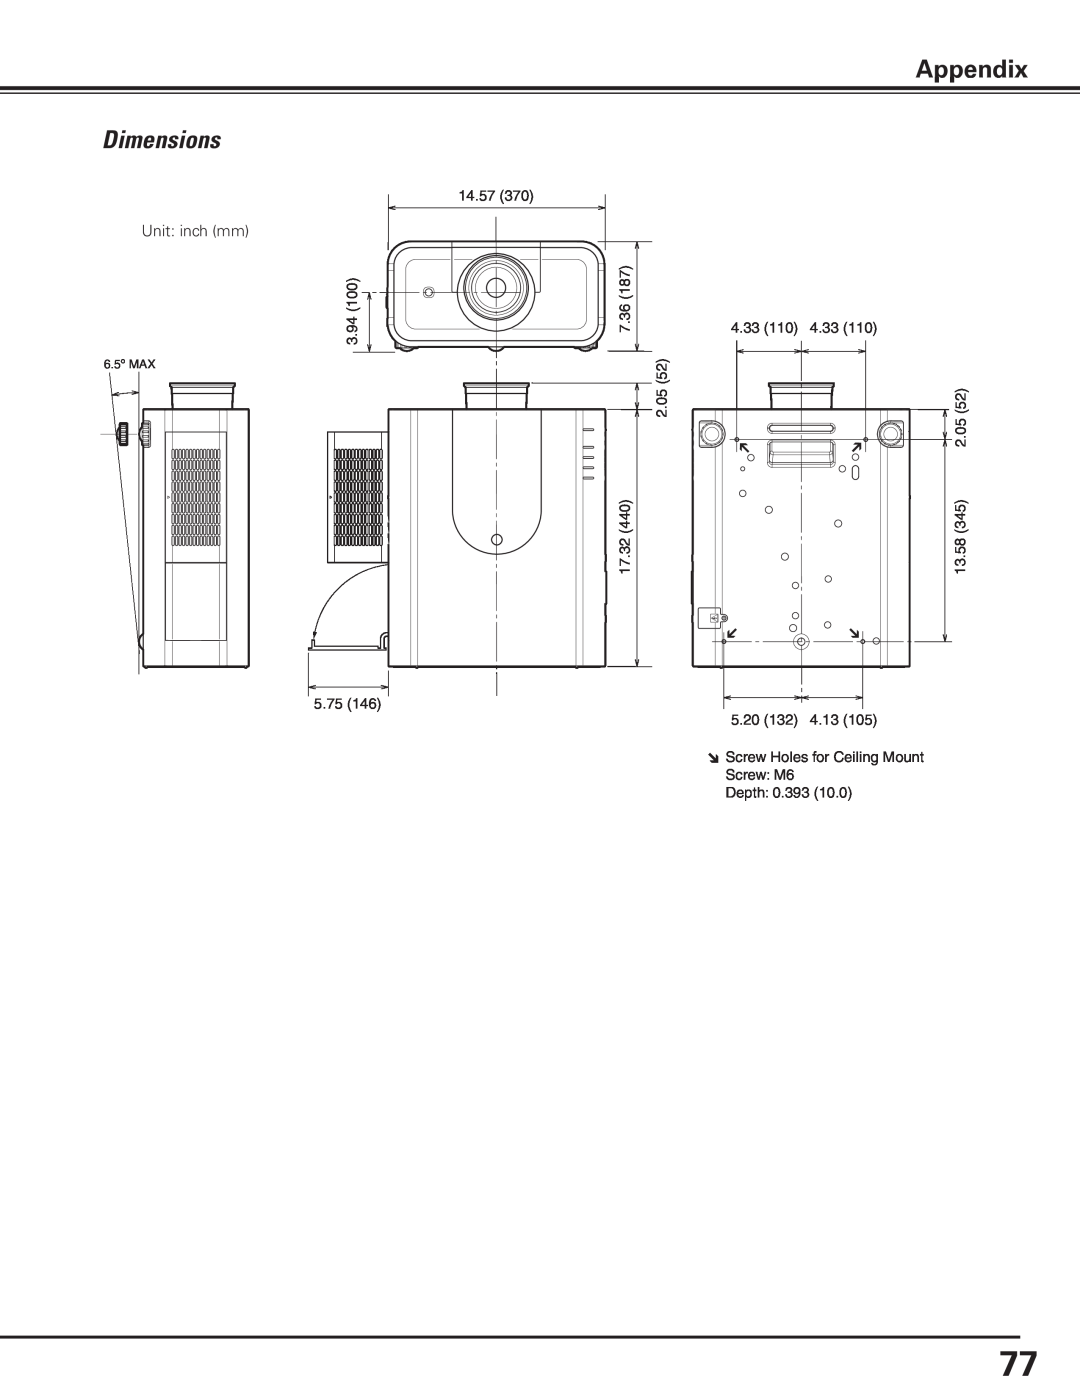 Canon 7585 manual Dimensions, Appendix, Unit inch mm 